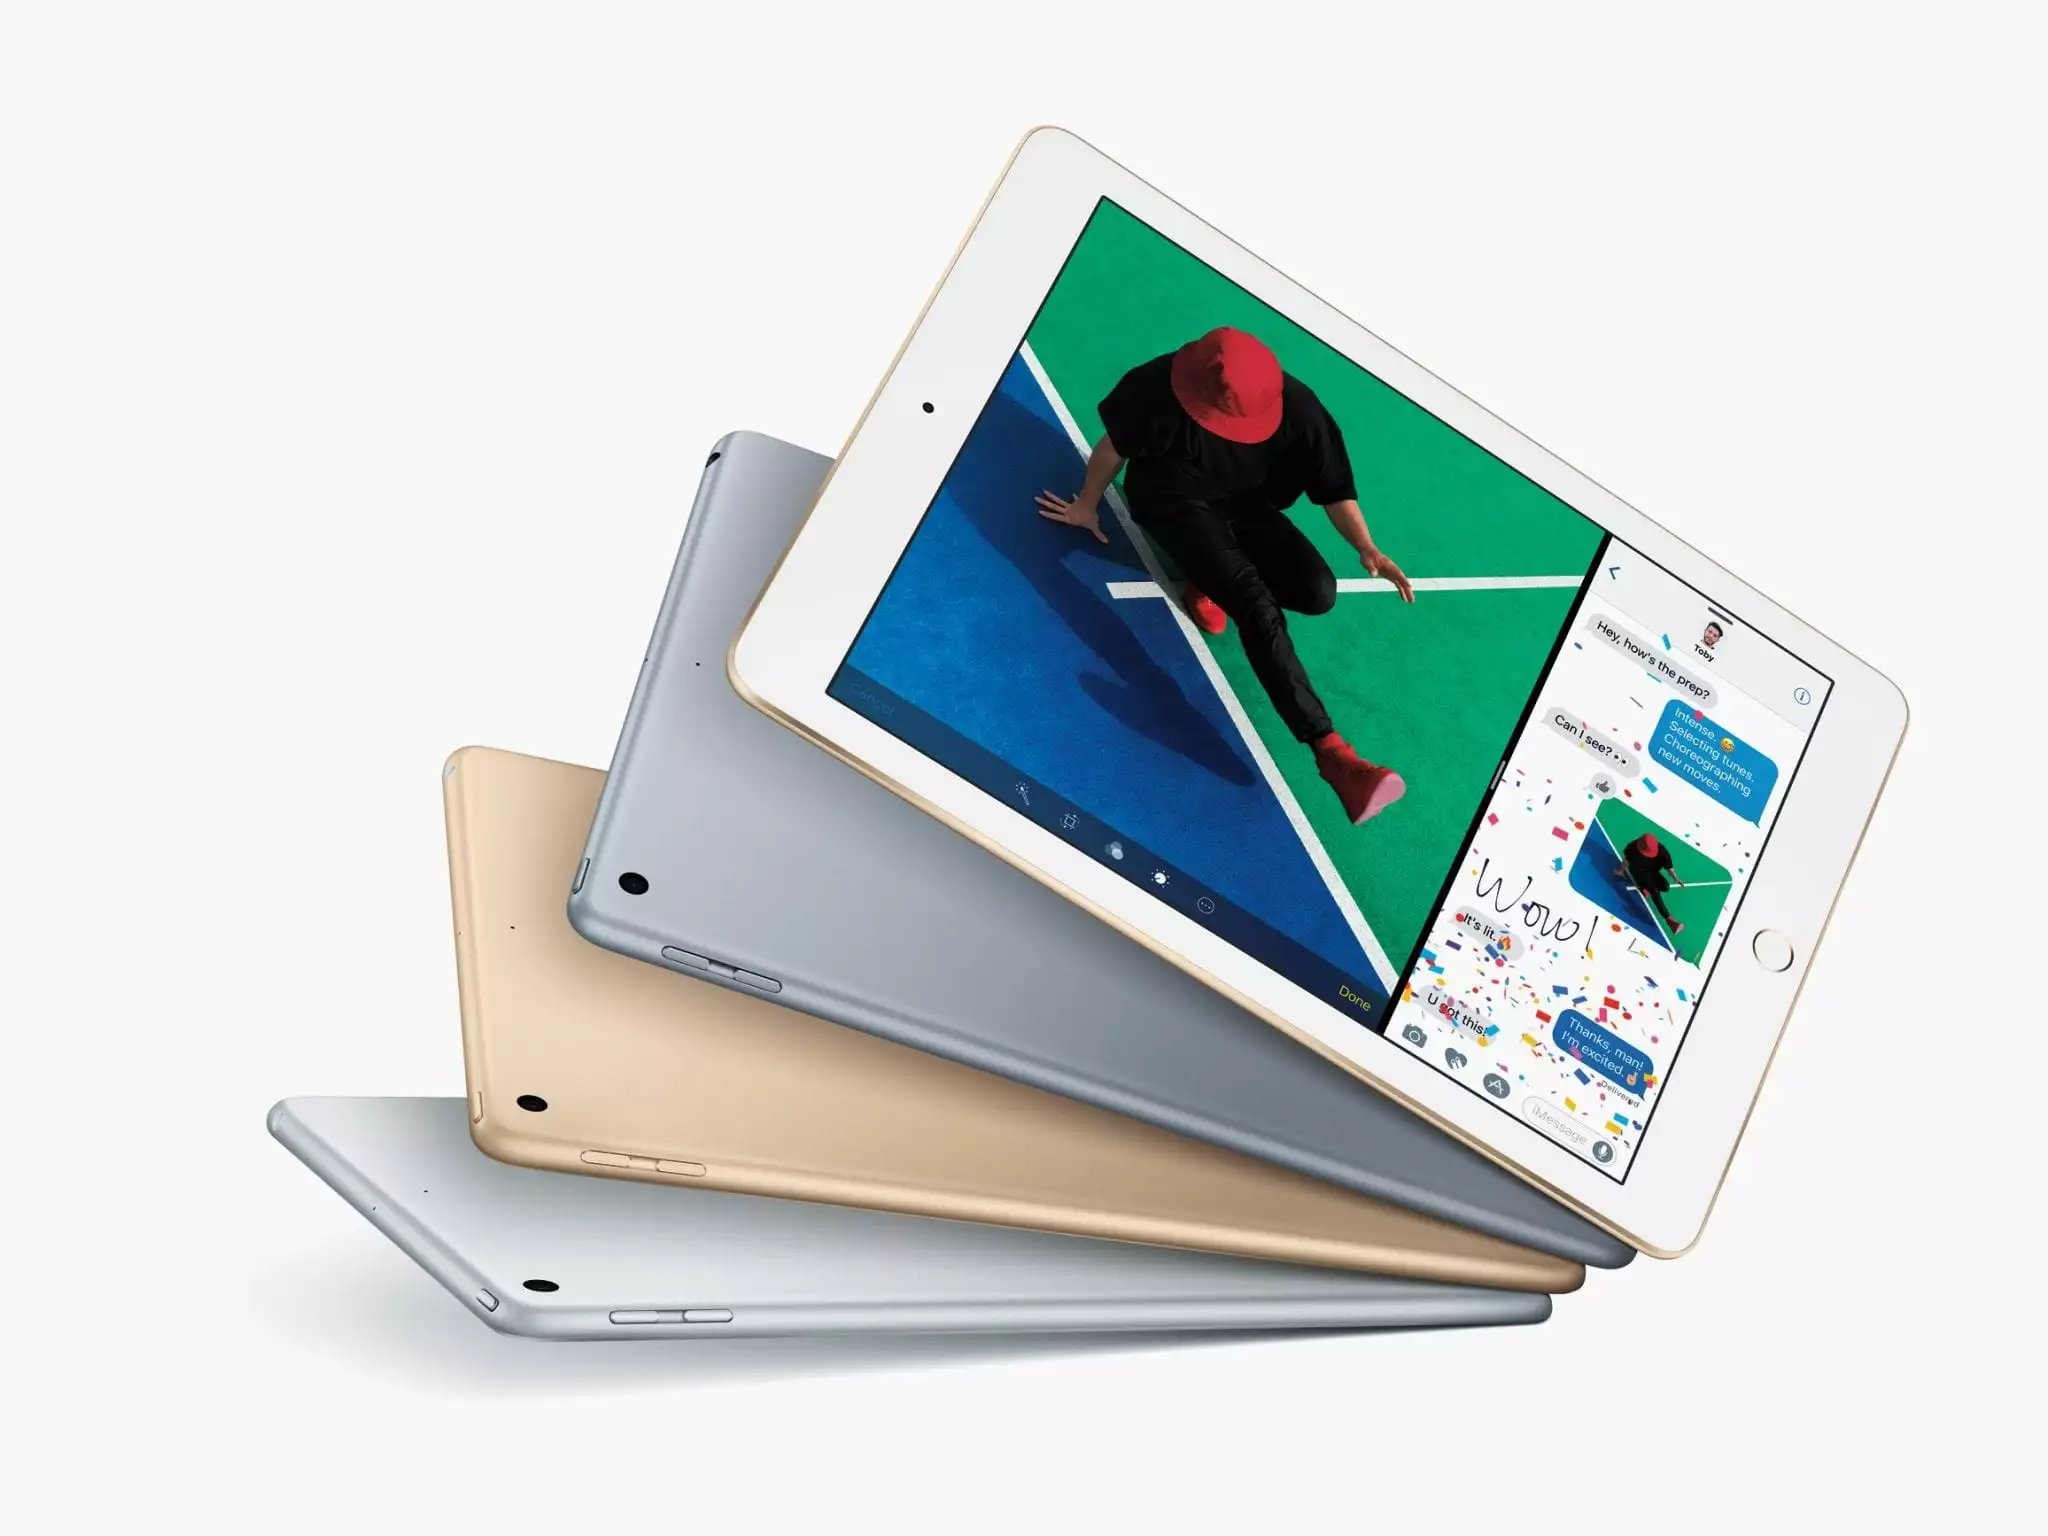 Apple iPad 5th Generation(2018) Specs